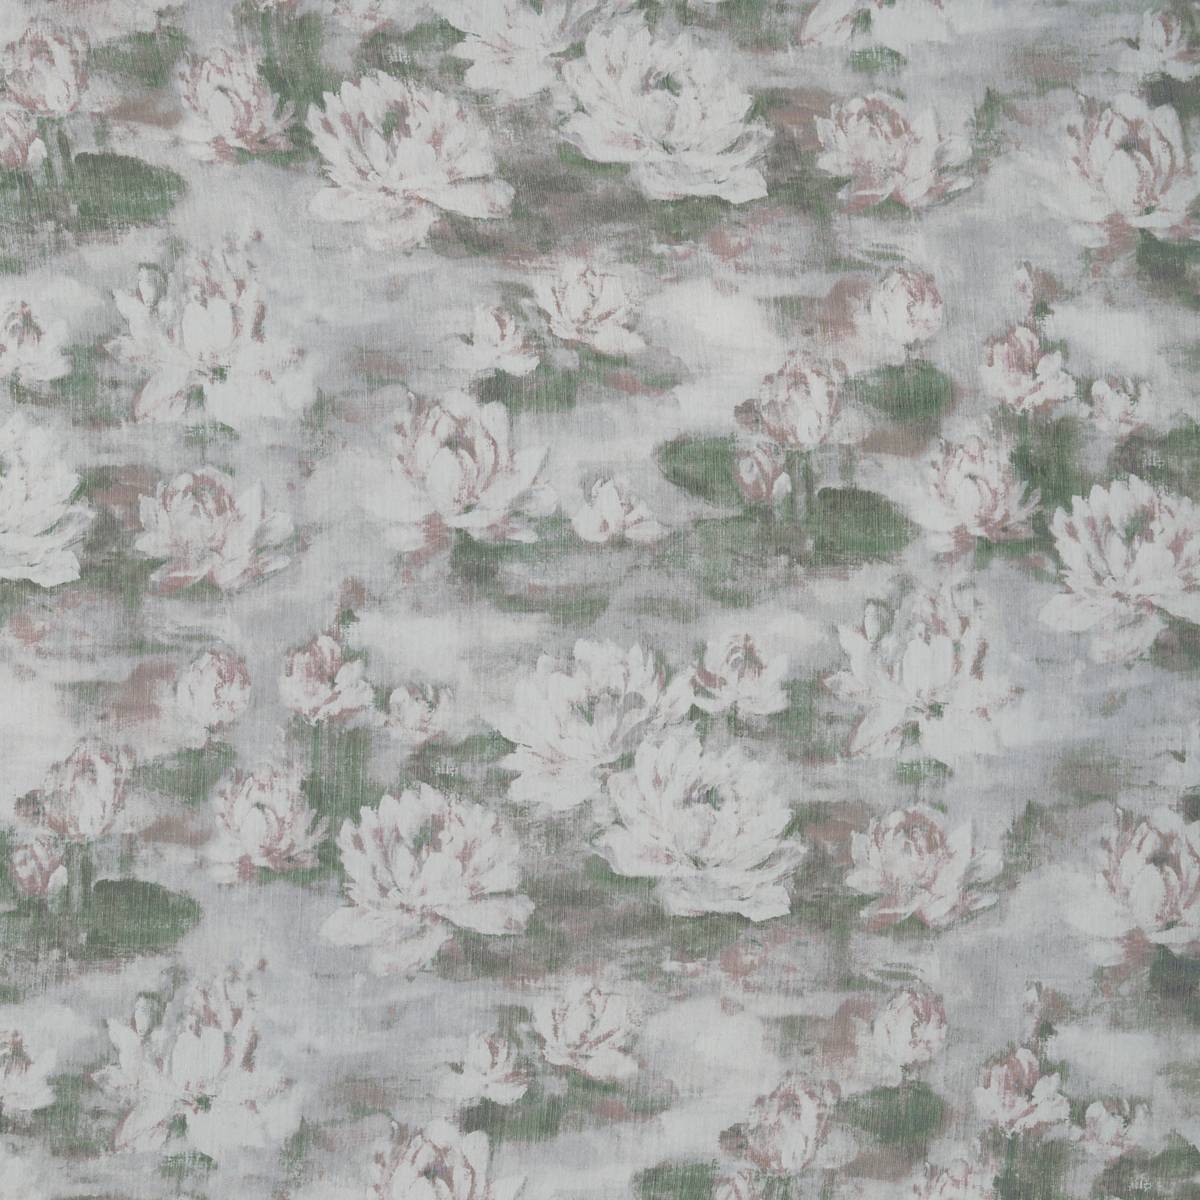 Lilypad Peach Blossom Fabric by Prestigious Textiles